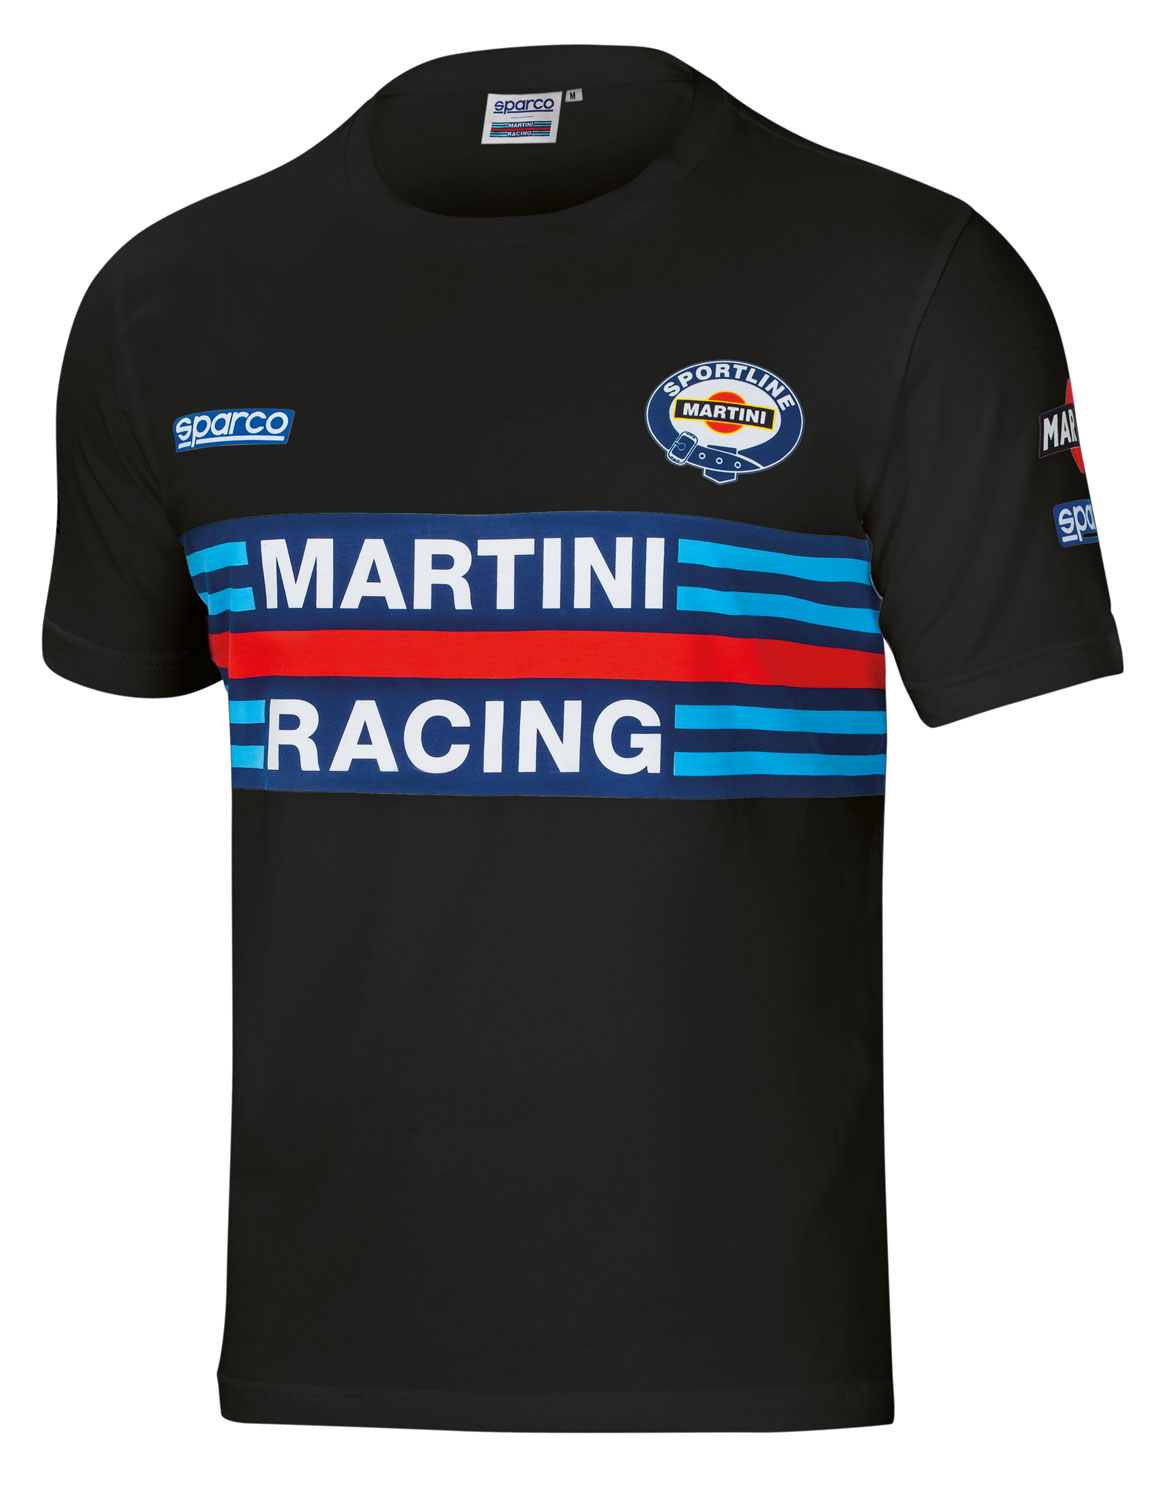 Sparco T-Shirt Martini Racing, schwarz